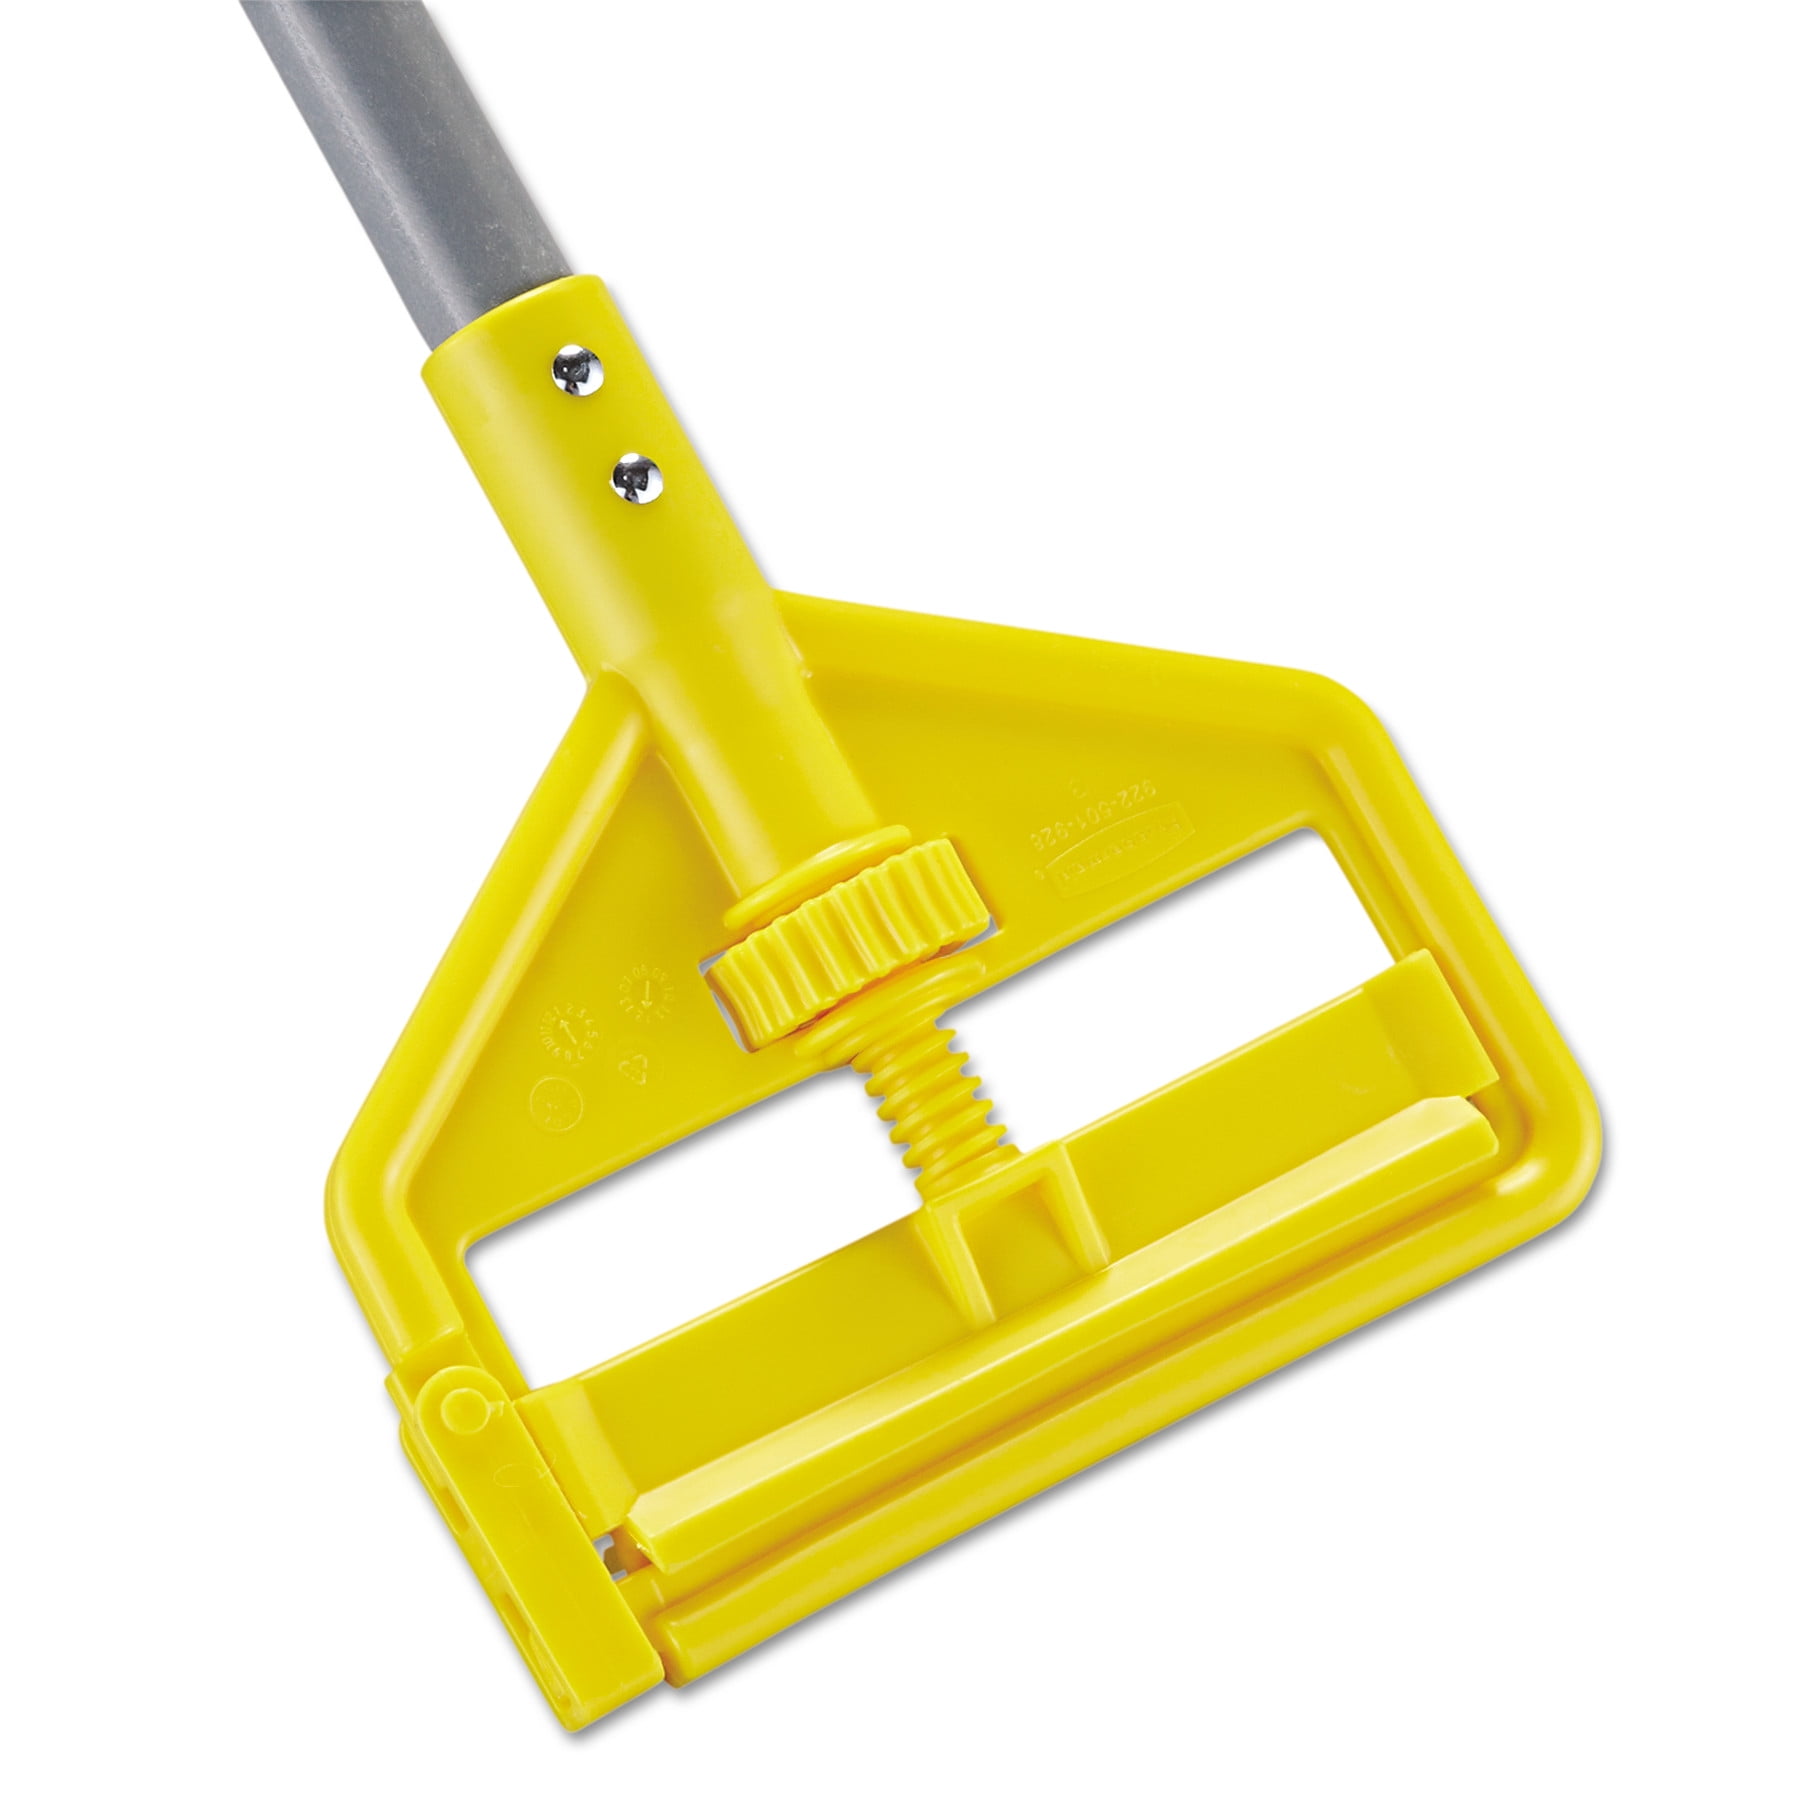 Rubbermaid Commercial Gripper Aluminum Mop Handle 1 1/8 dia x 60 Gray/Yellow 